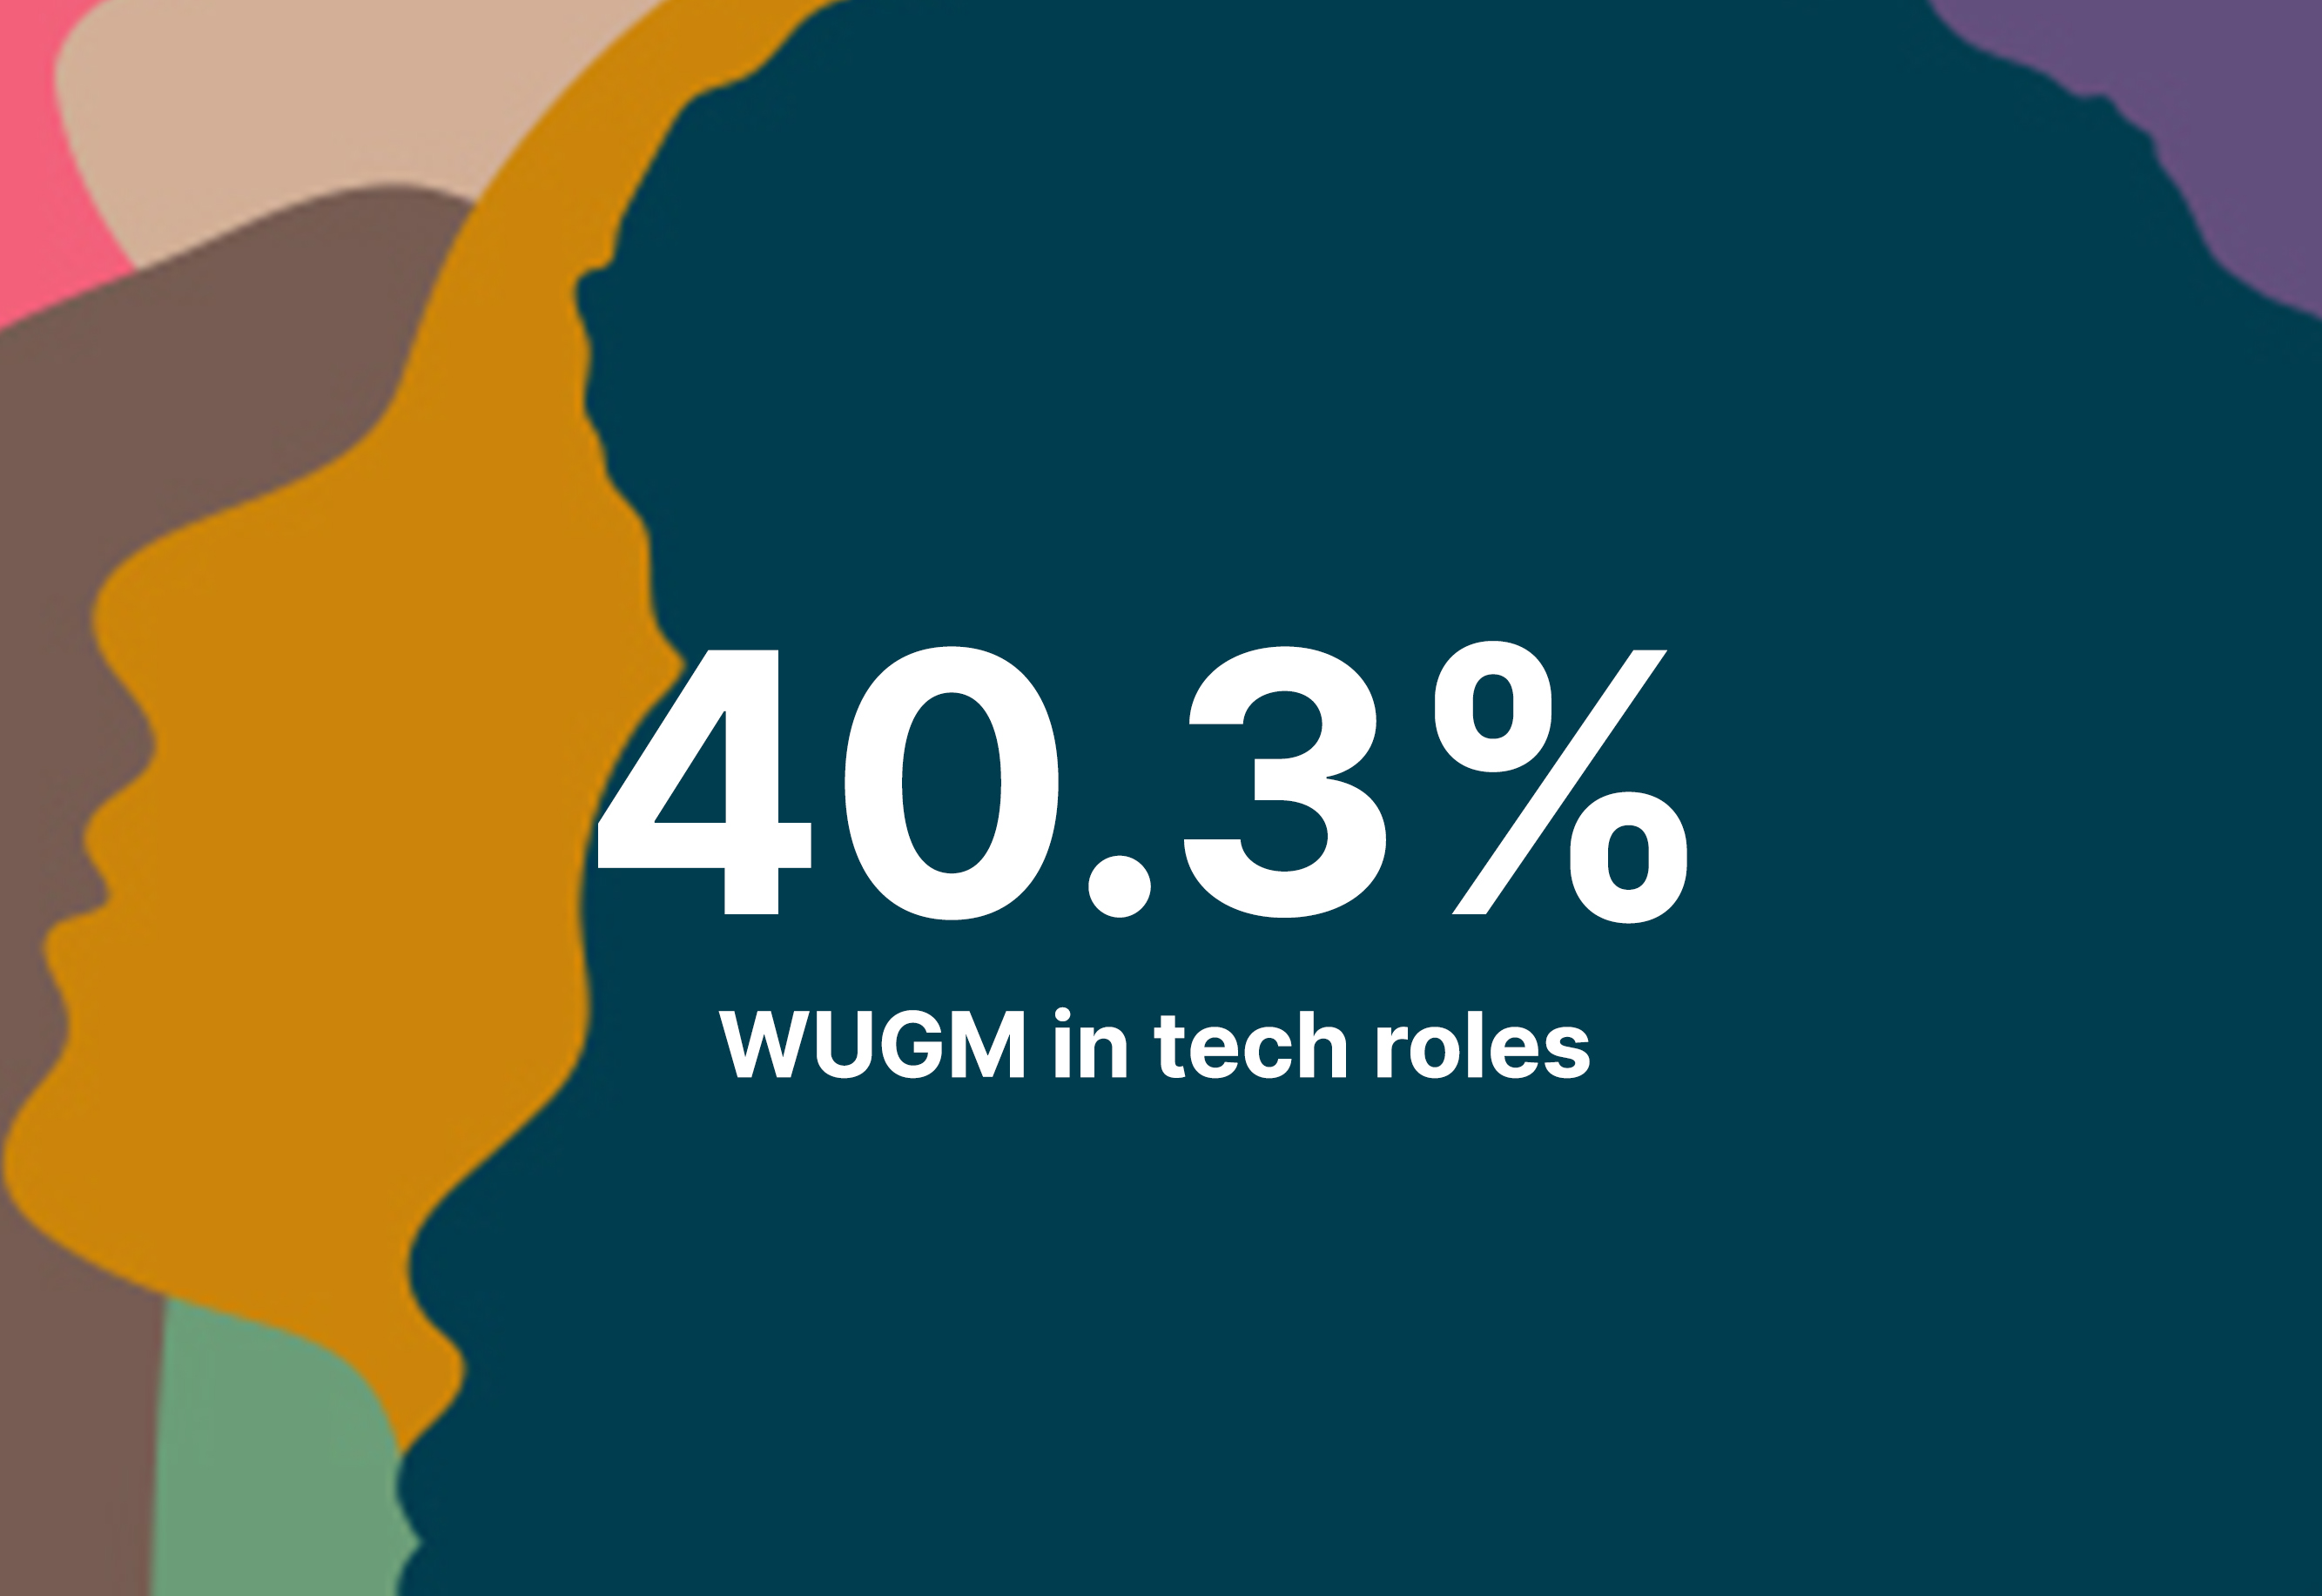 38.2% WUGM in tech roles